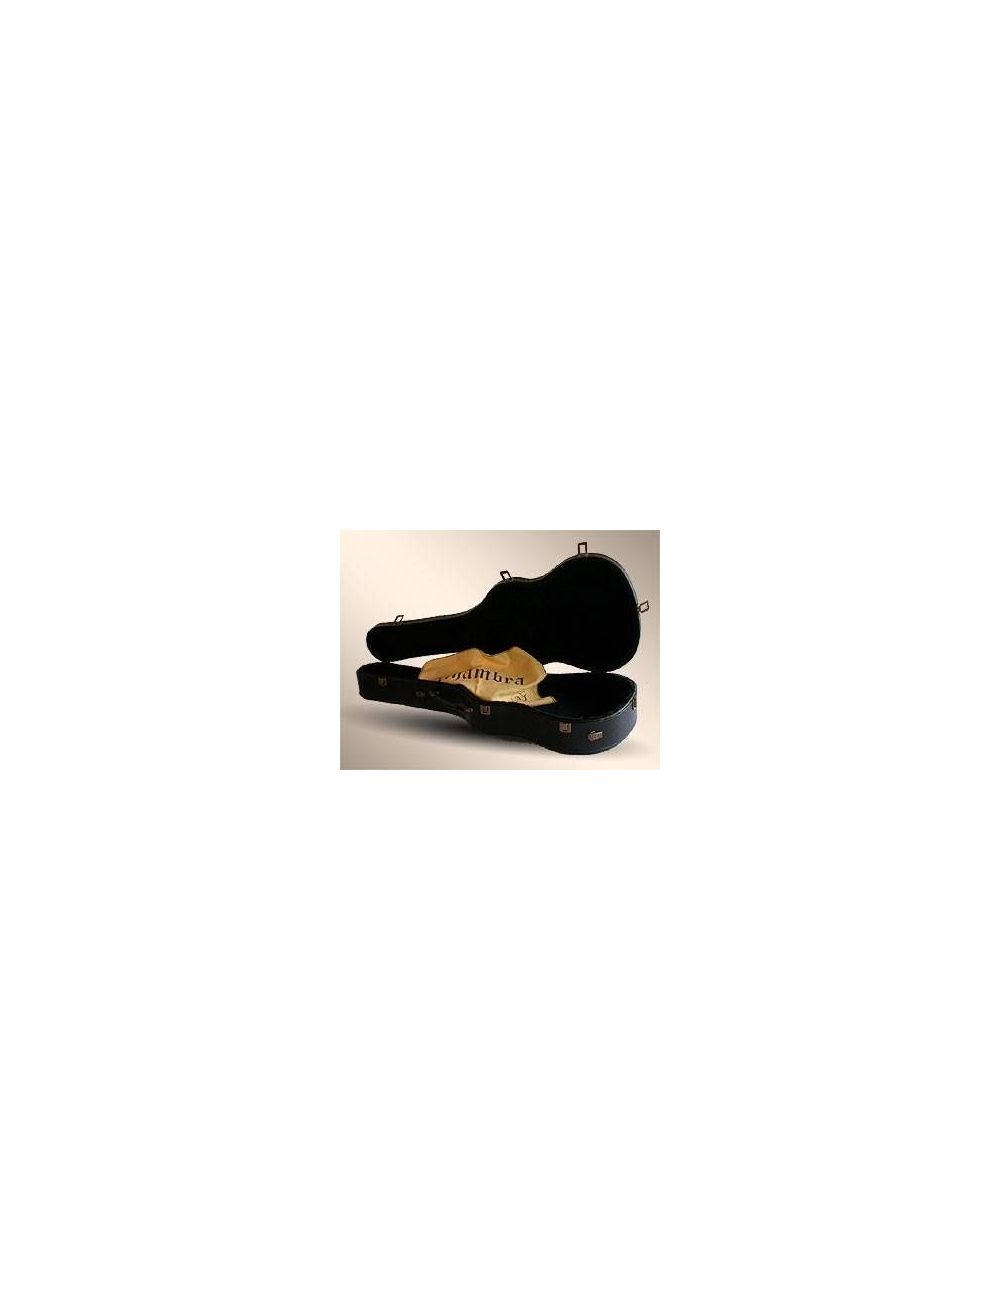 Alhambra SI 541-2A Guitar hardcase Narrow body for classical and flamenco guitar